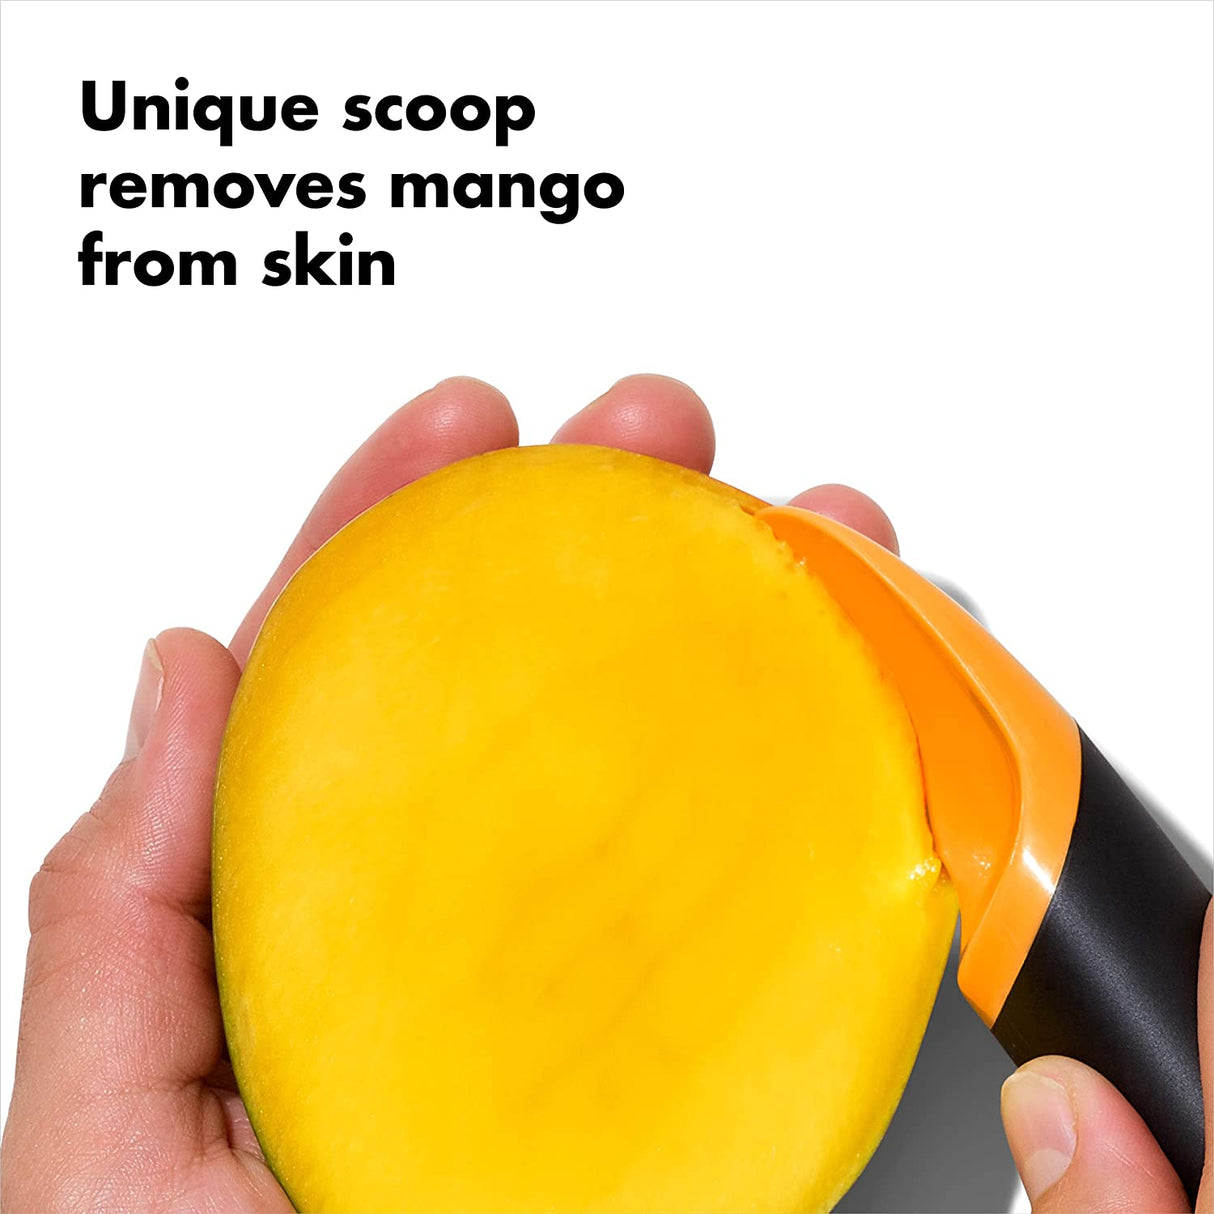 OXO Mango Slicer with Scoop